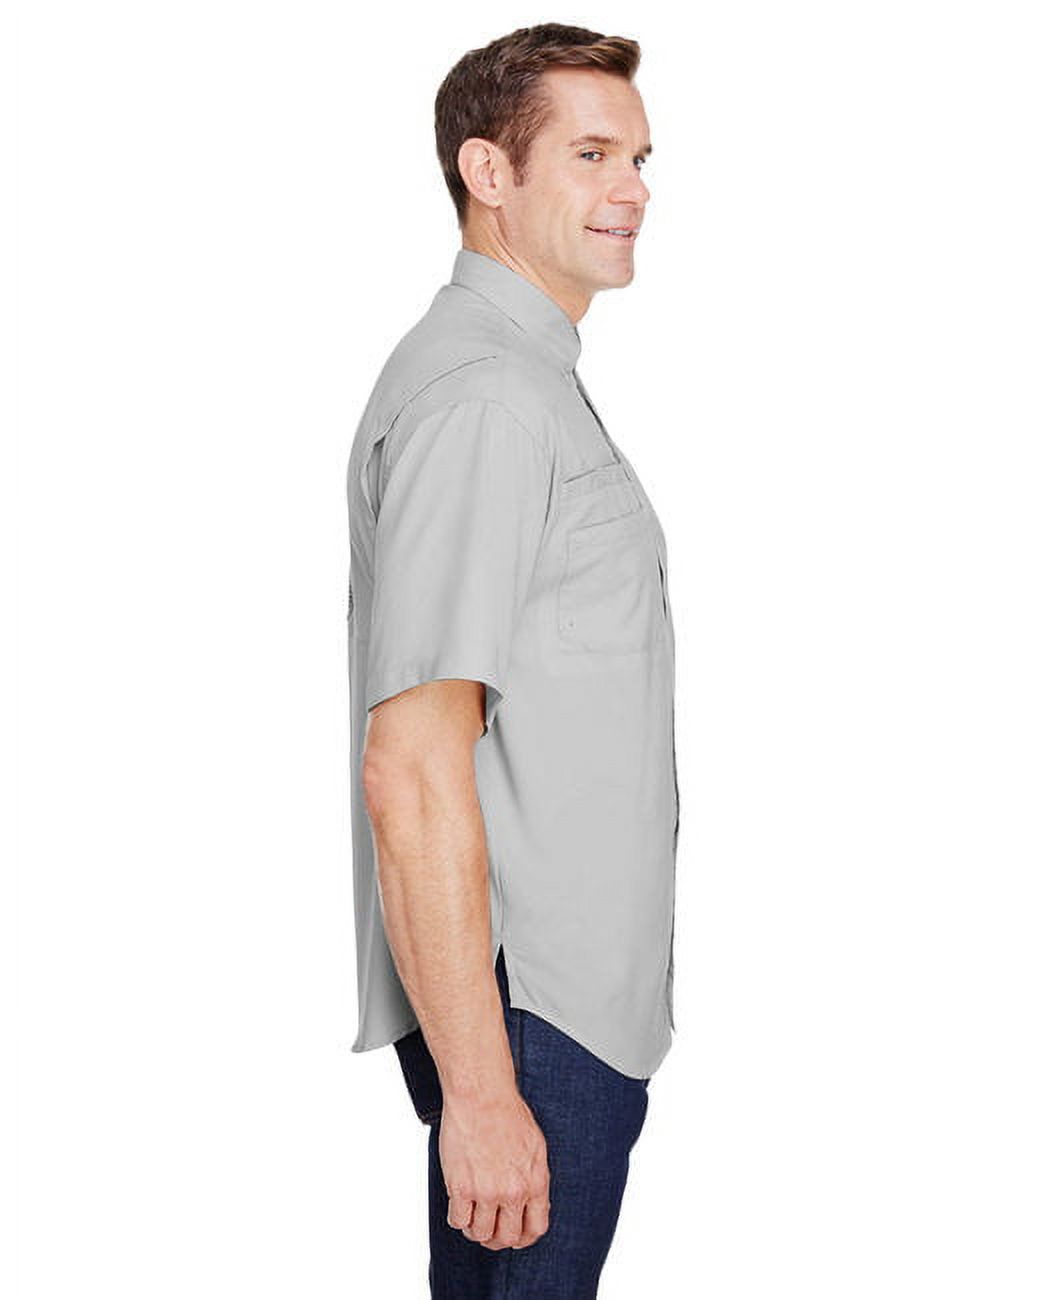 Columbia 7266 Men's Tamiami II Short-Sleeve Shirt - image 3 of 3